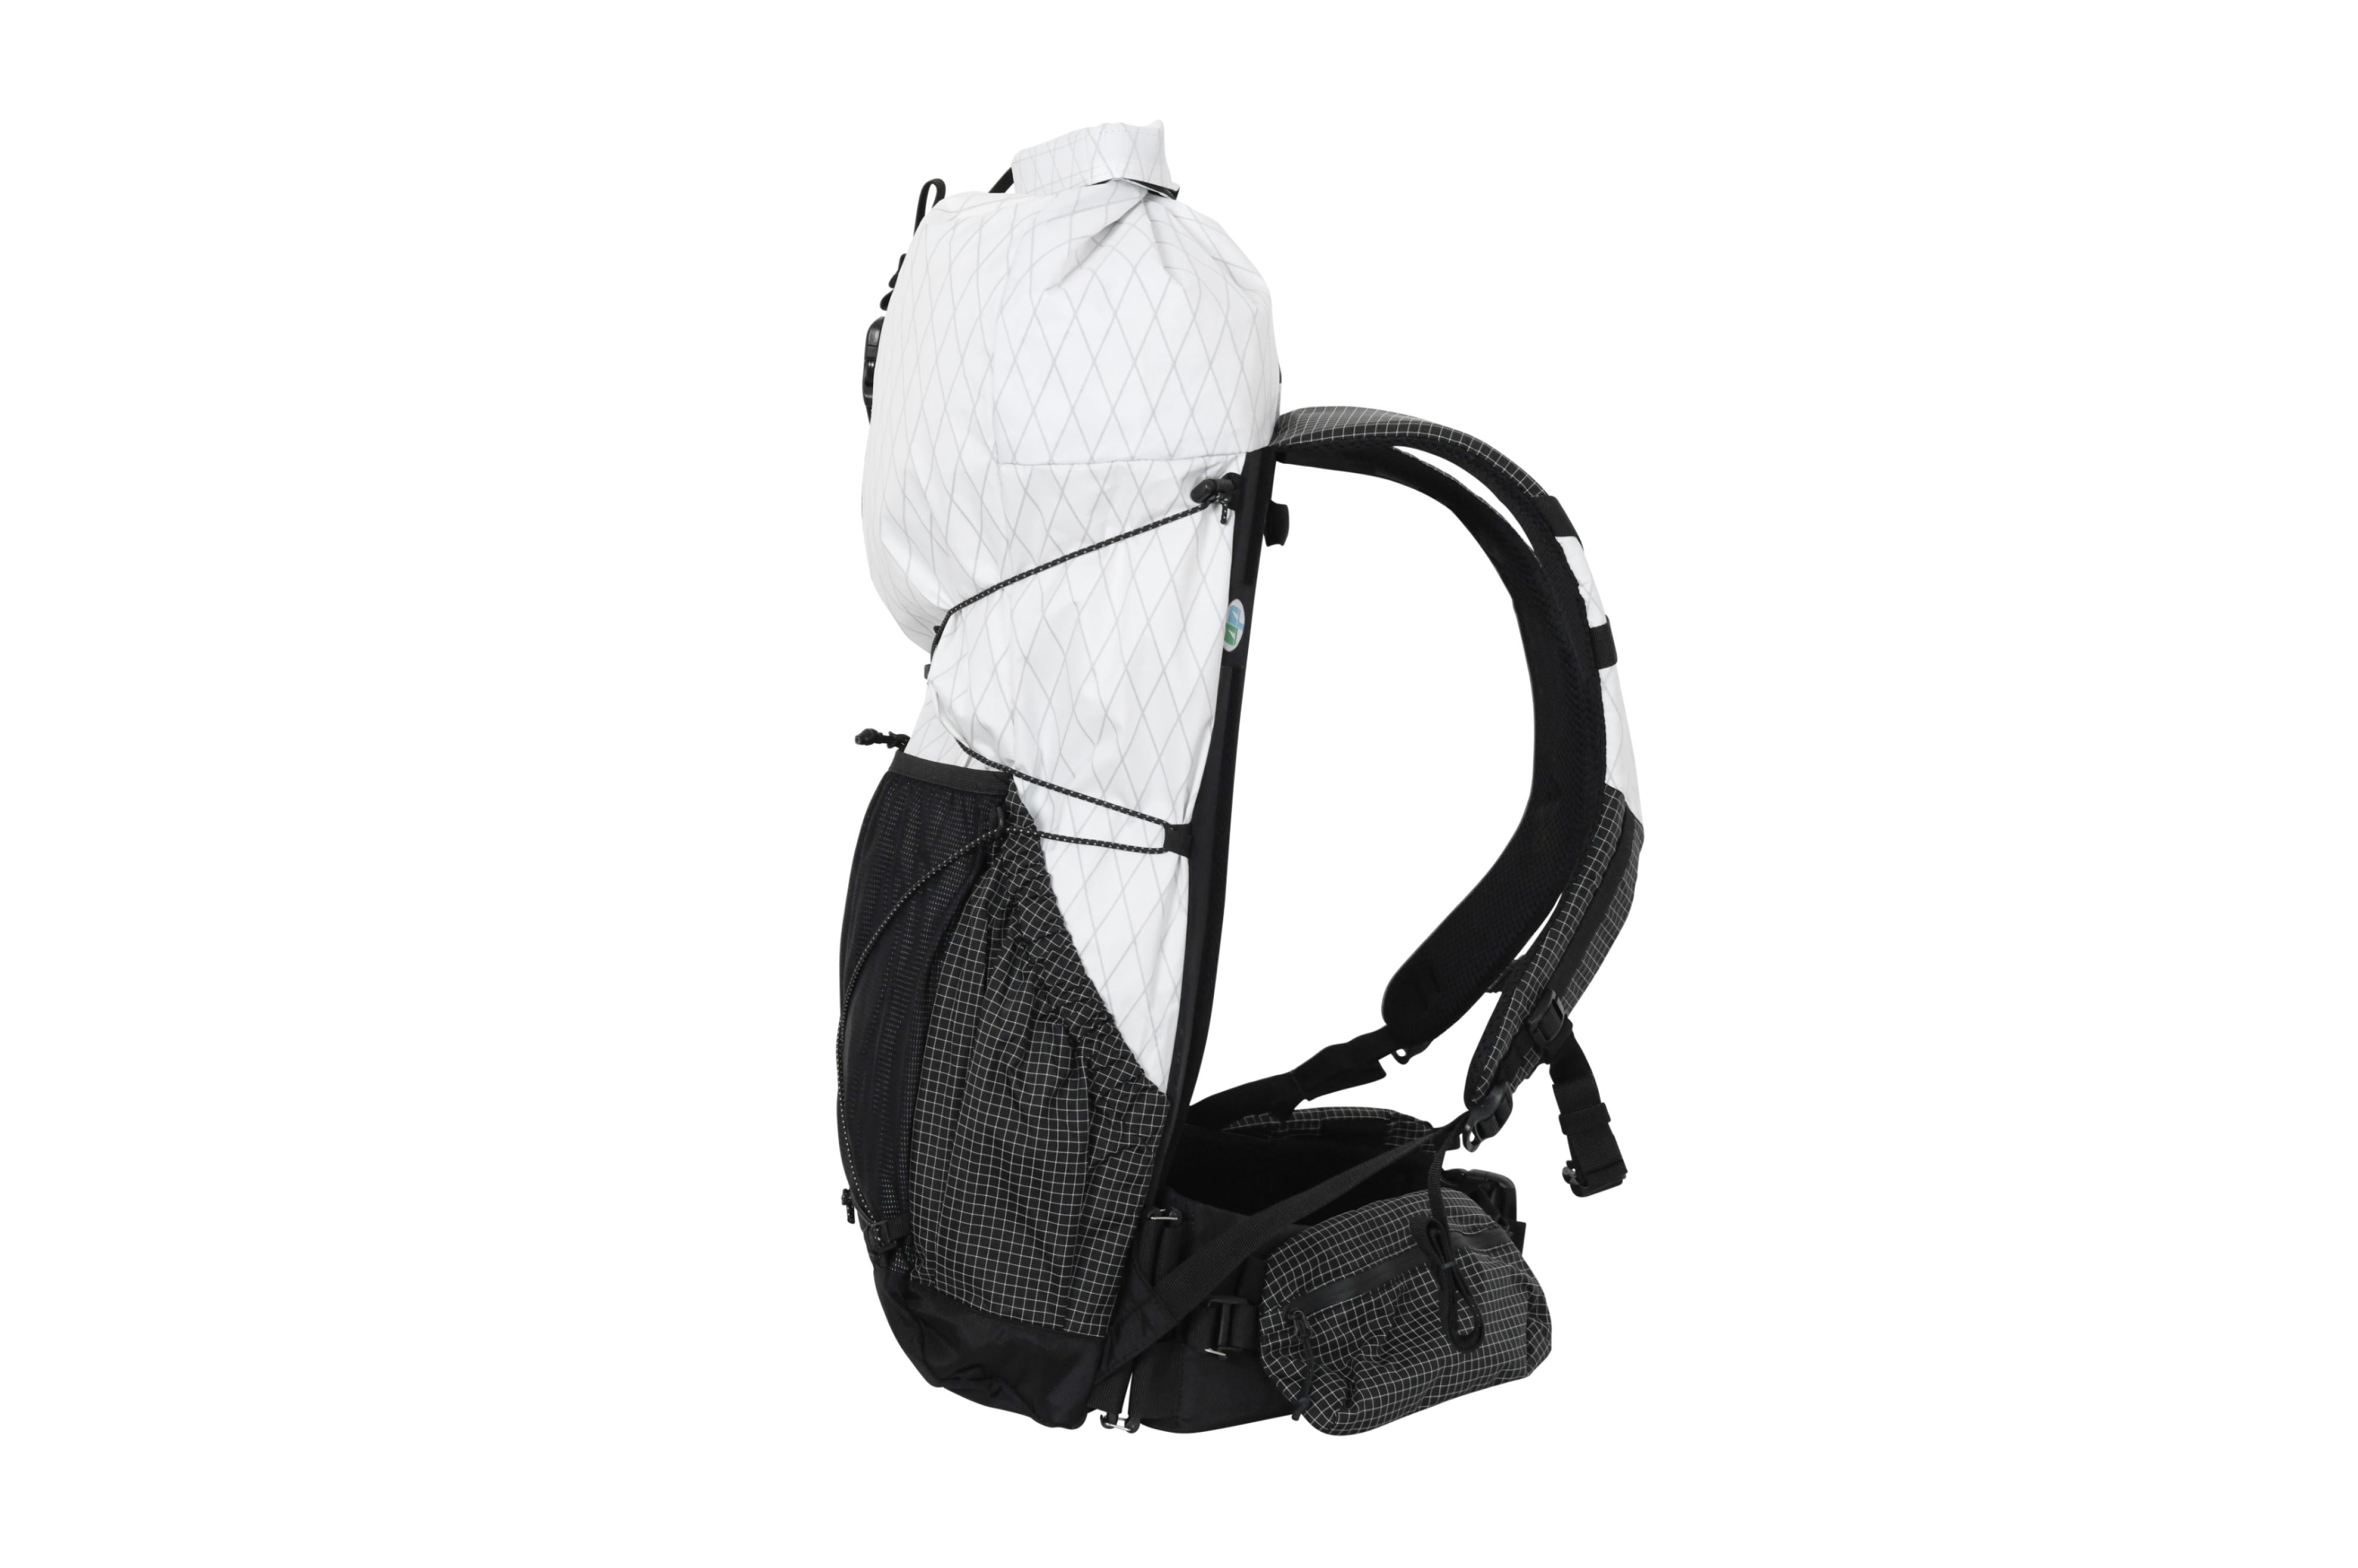 ZT06 XPAC backpack